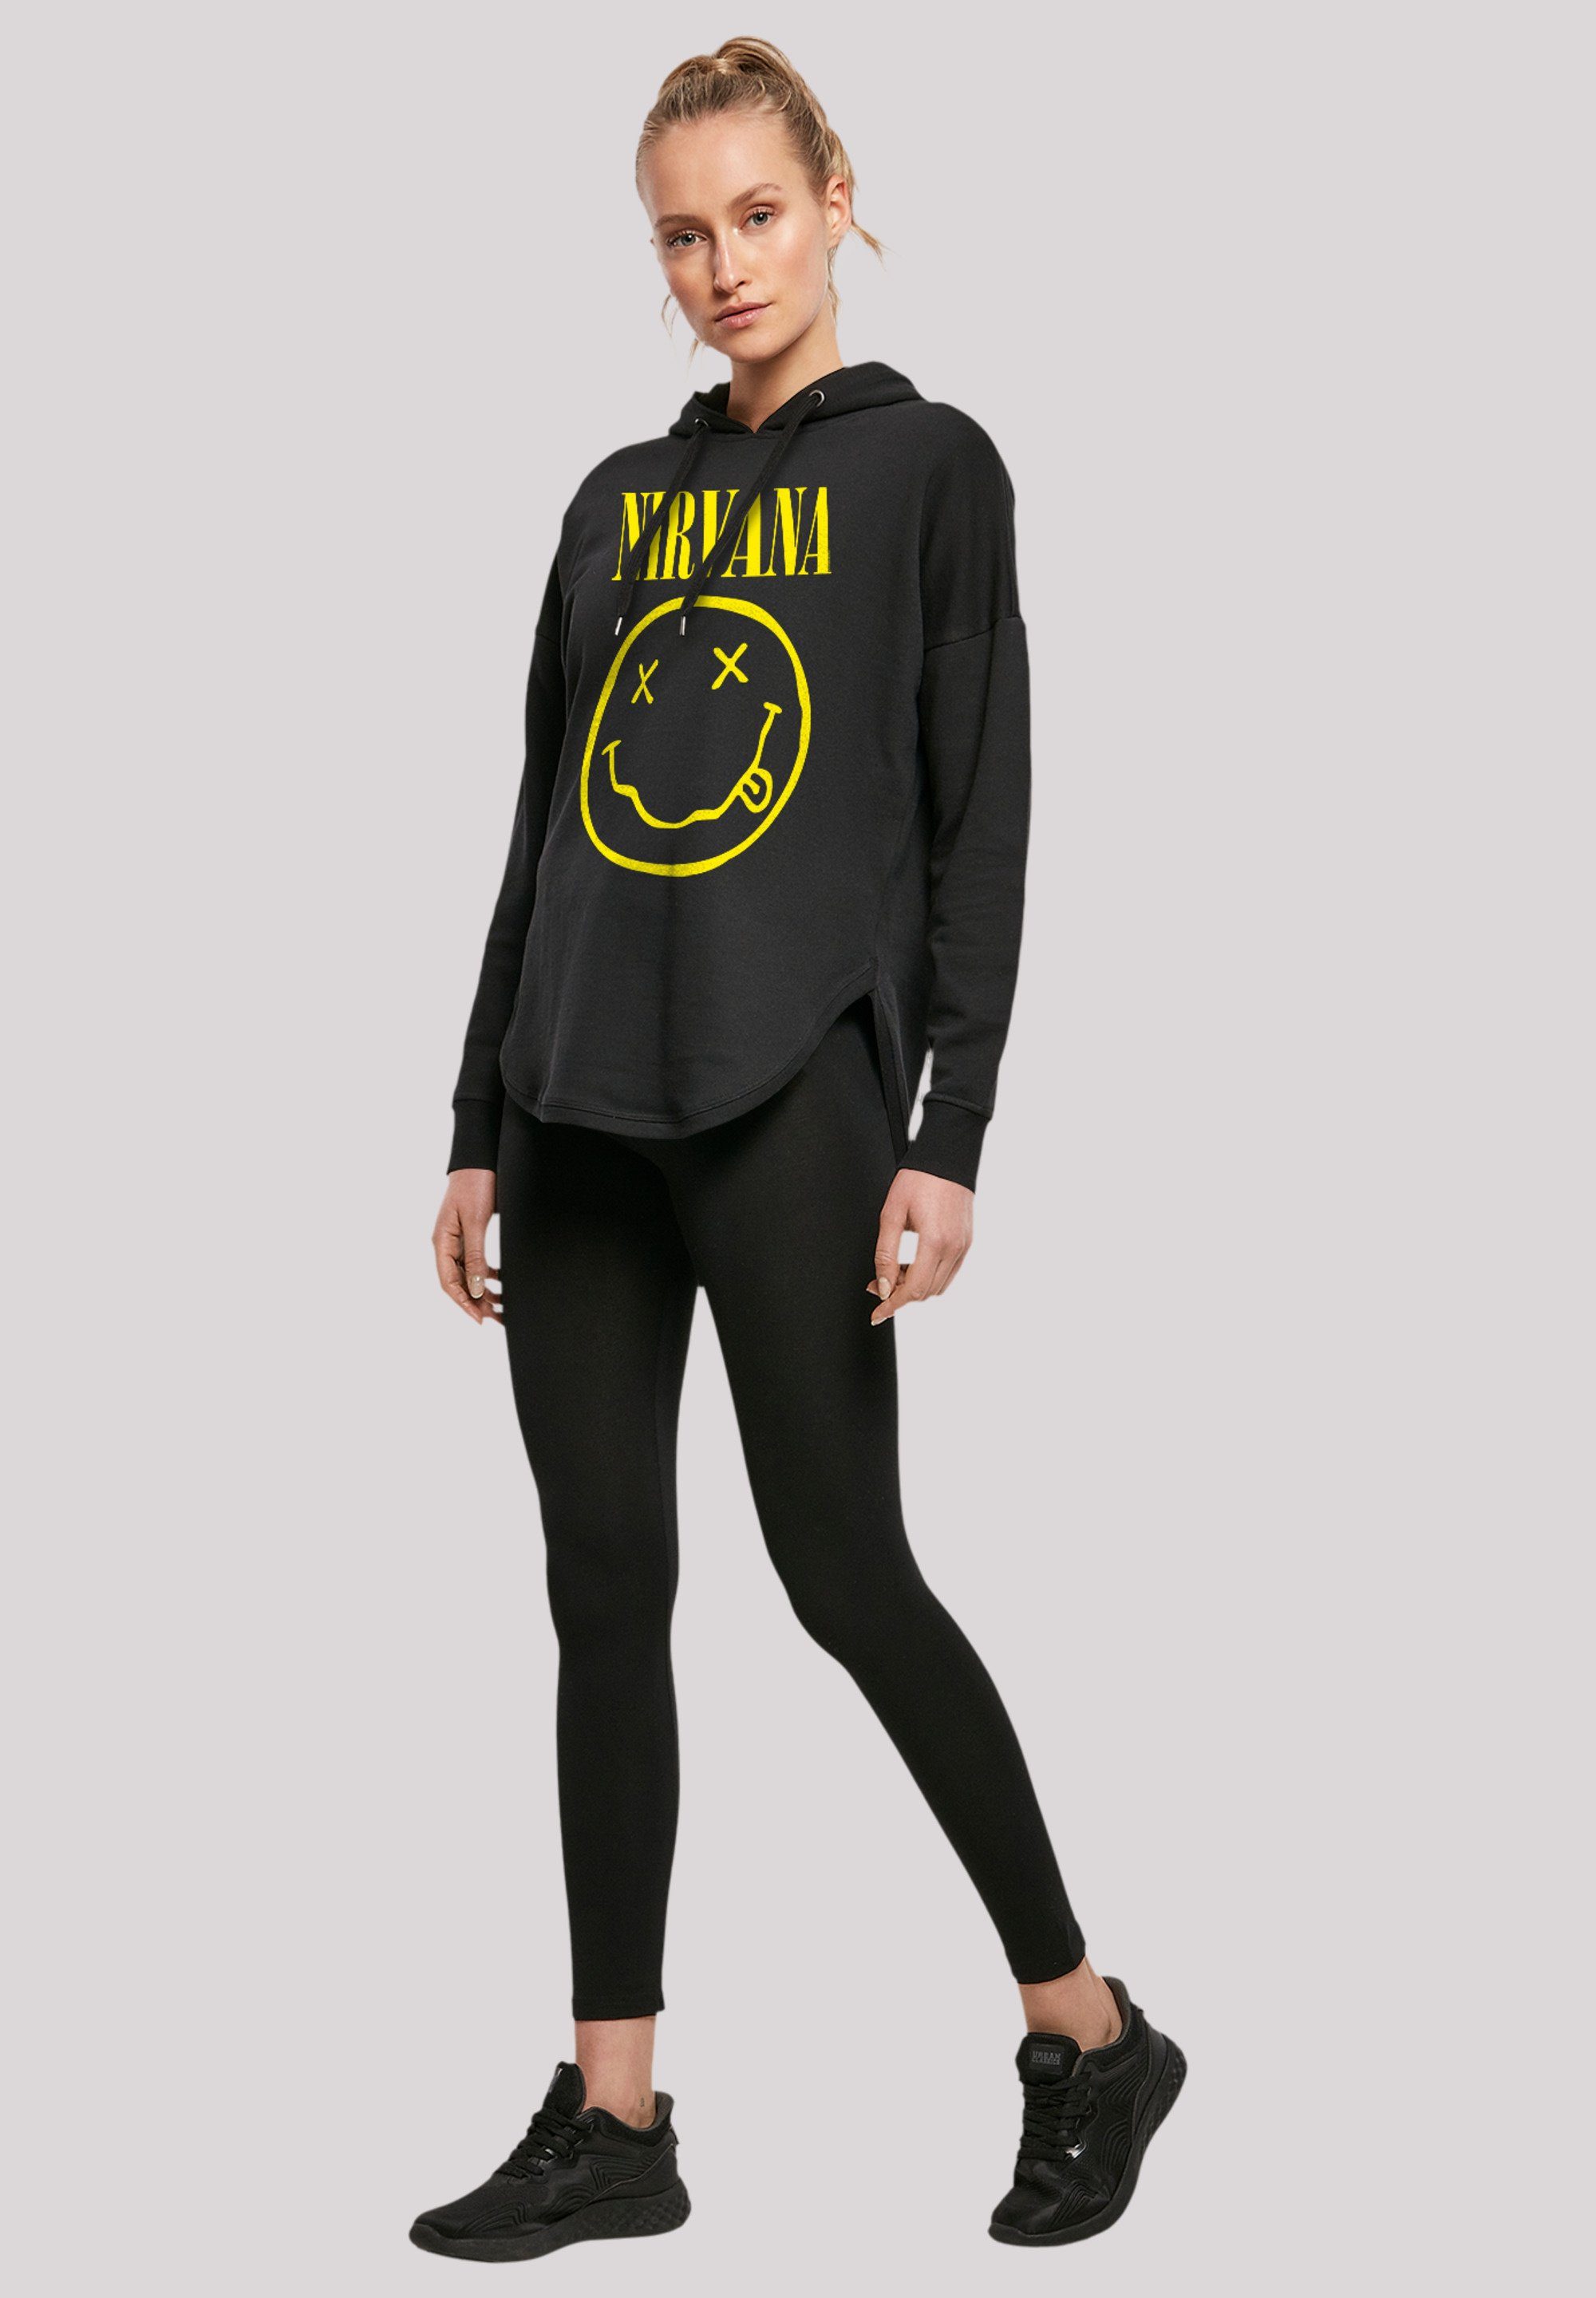 F4NT4STIC Sweatshirt Nirvana Yellow Rock Band Qualität Premium Happy Face schwarz